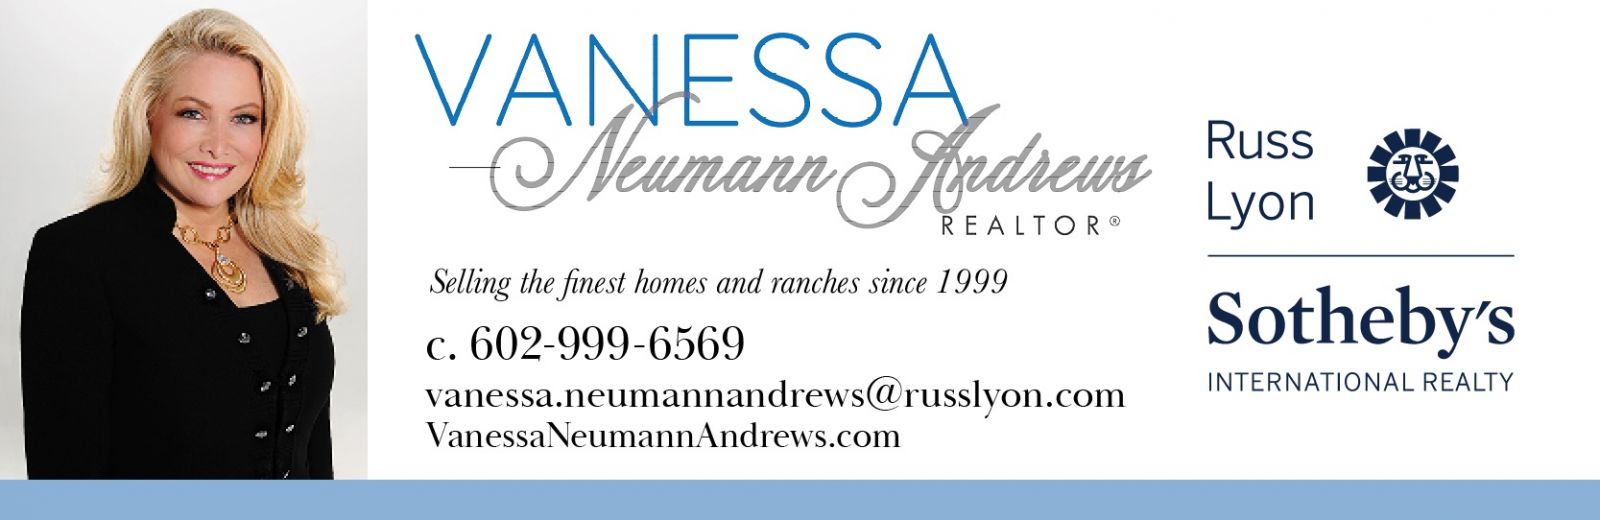 Visit Vanessa Neumann Andrews Horse Property Realtor